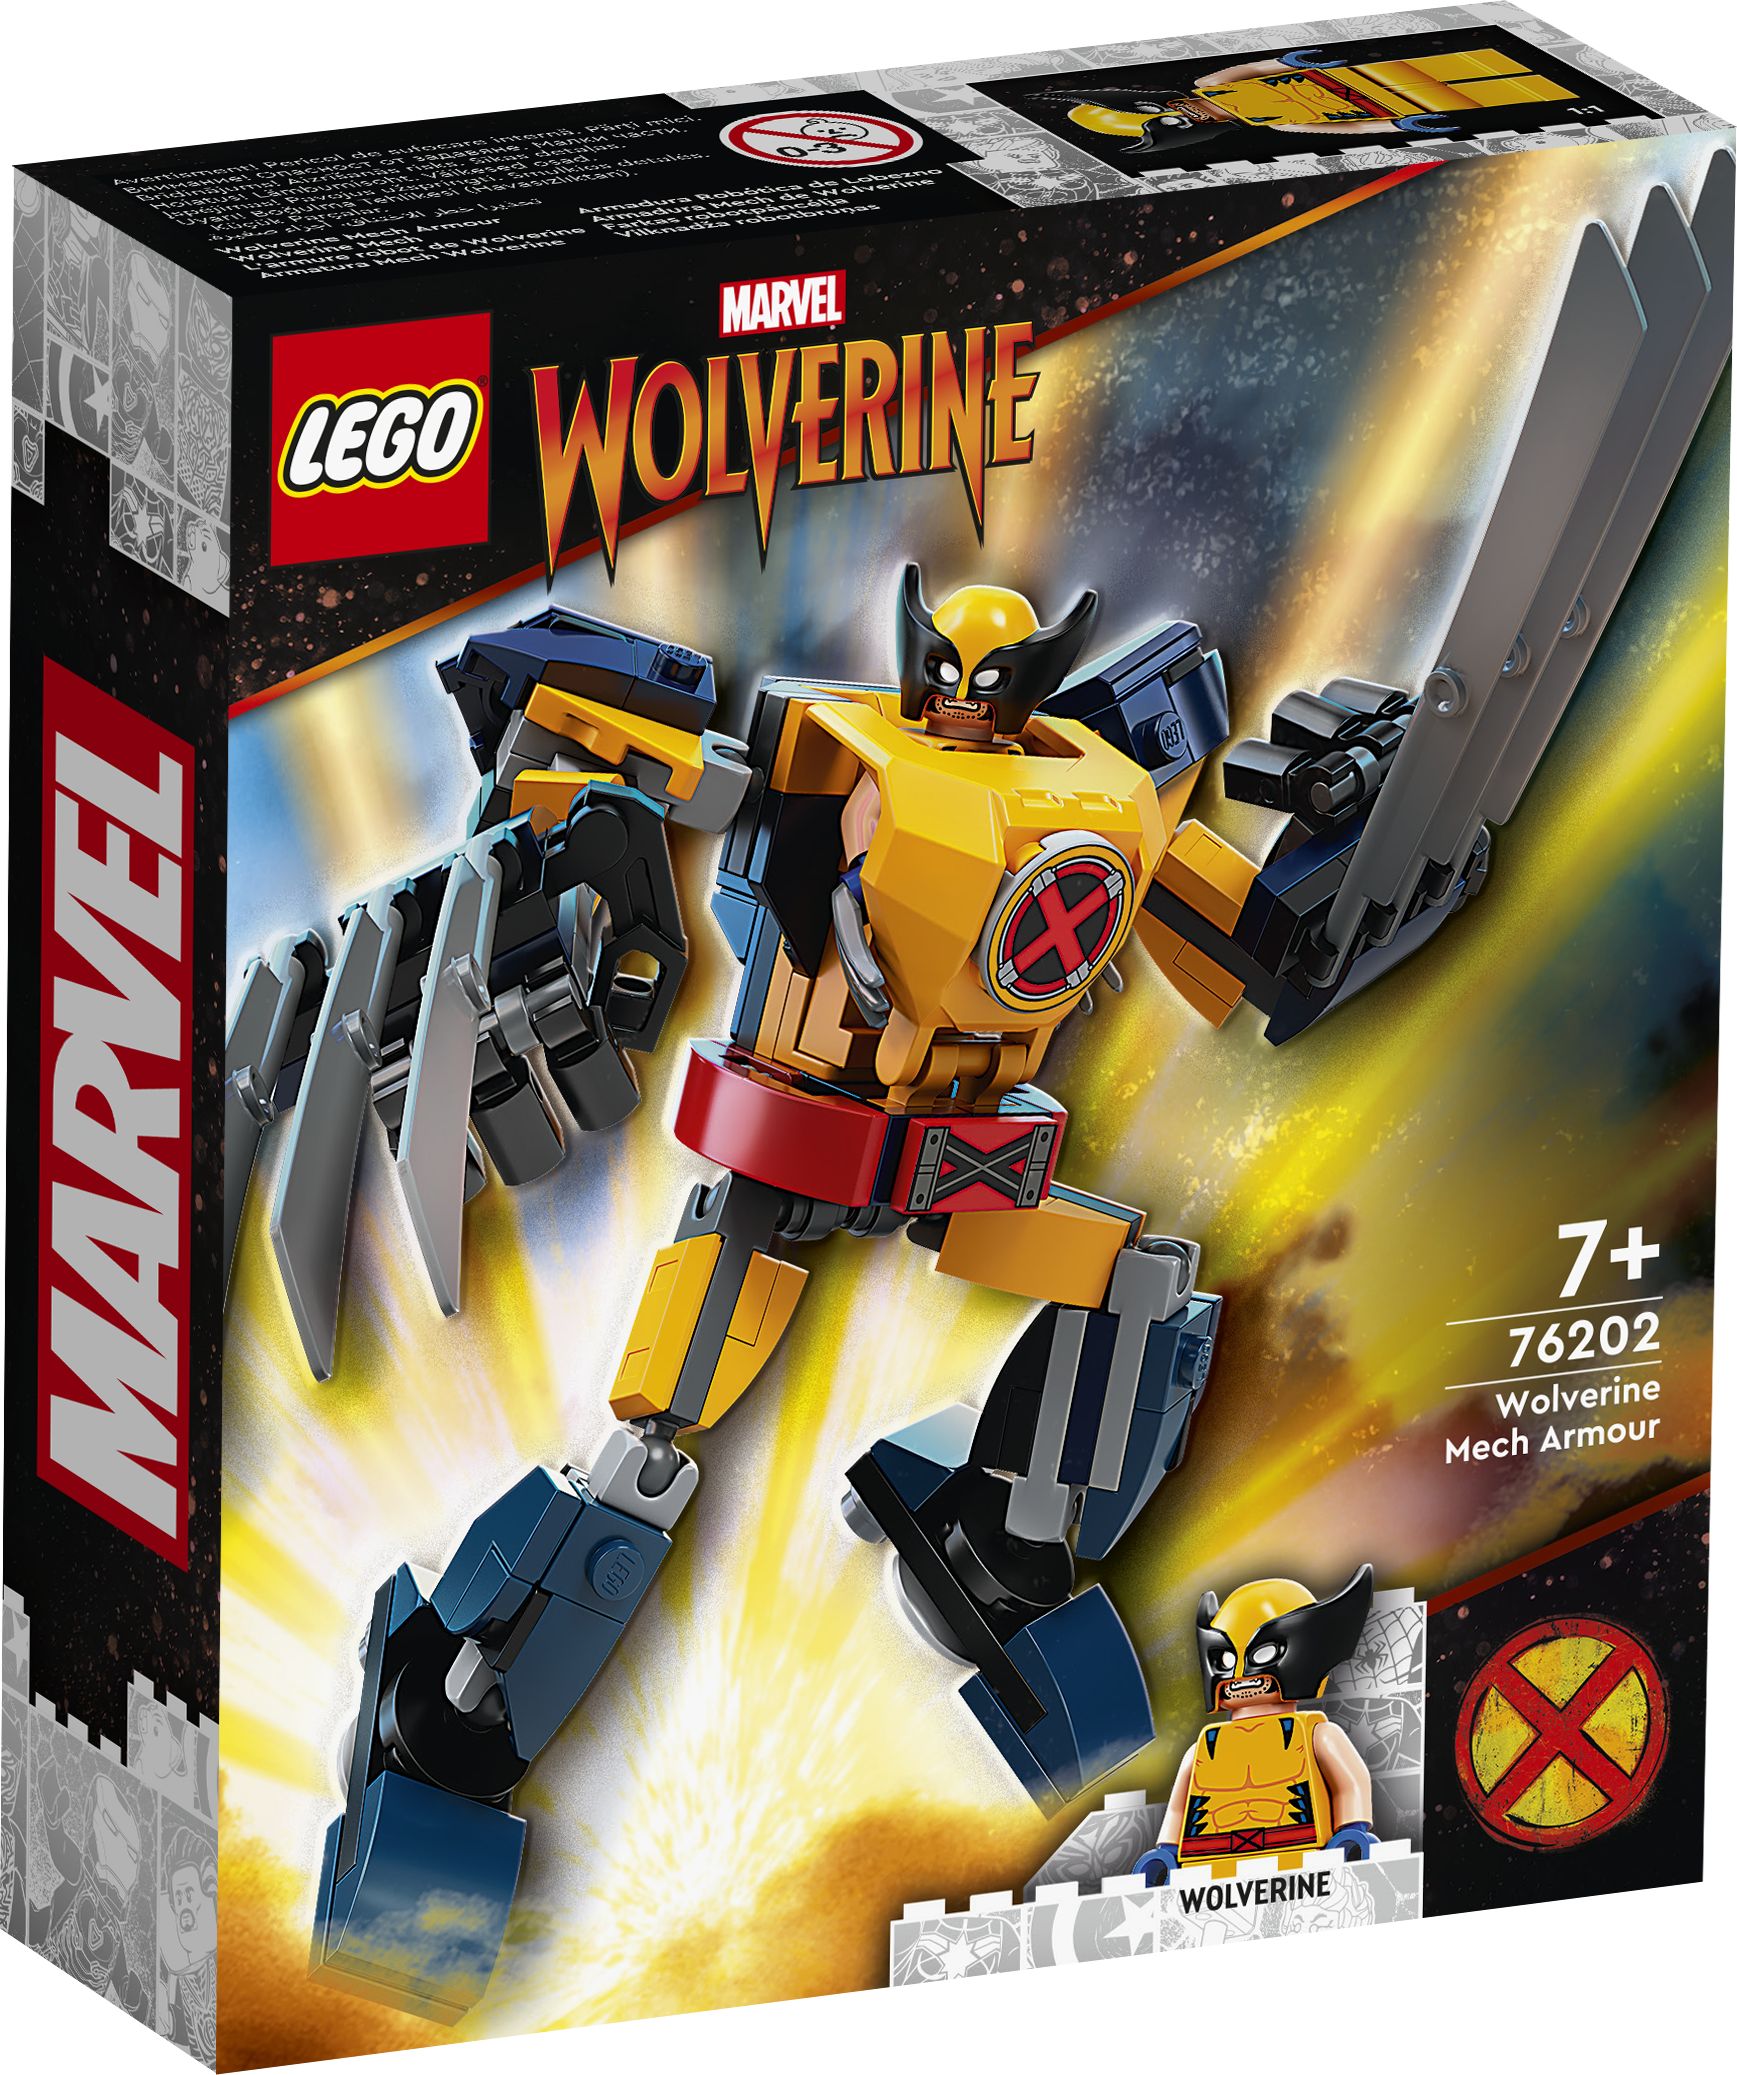 LEGO Super Heroes 76202 Wolverine Mech LEGO_76202_box1_v29.jpg